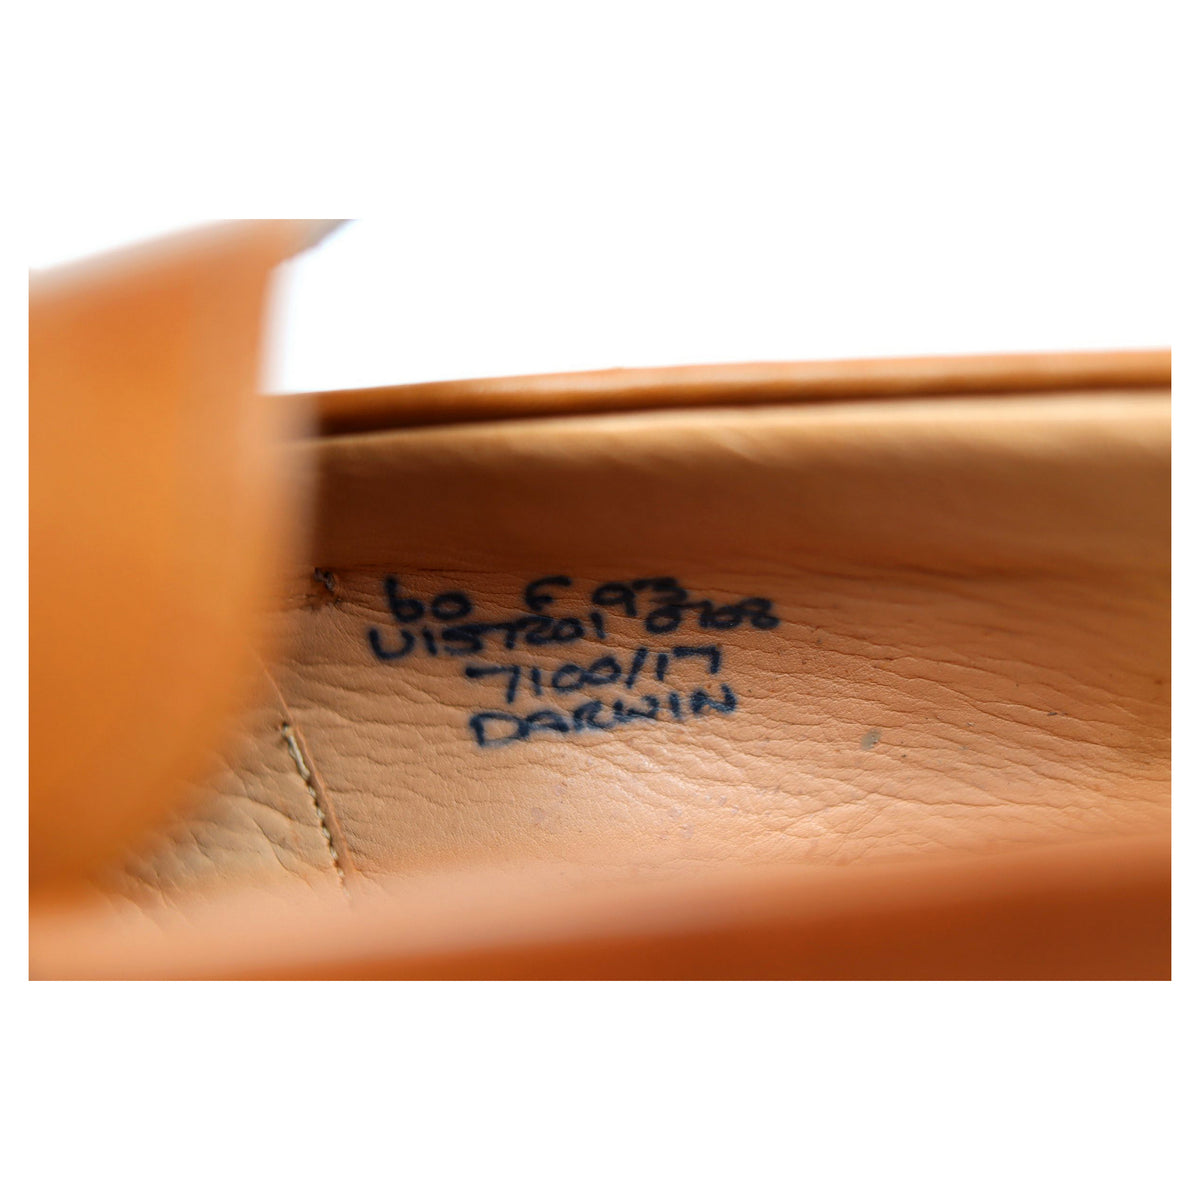 &#39;Darwin&#39; Brown Leather Loafers UK 6 F